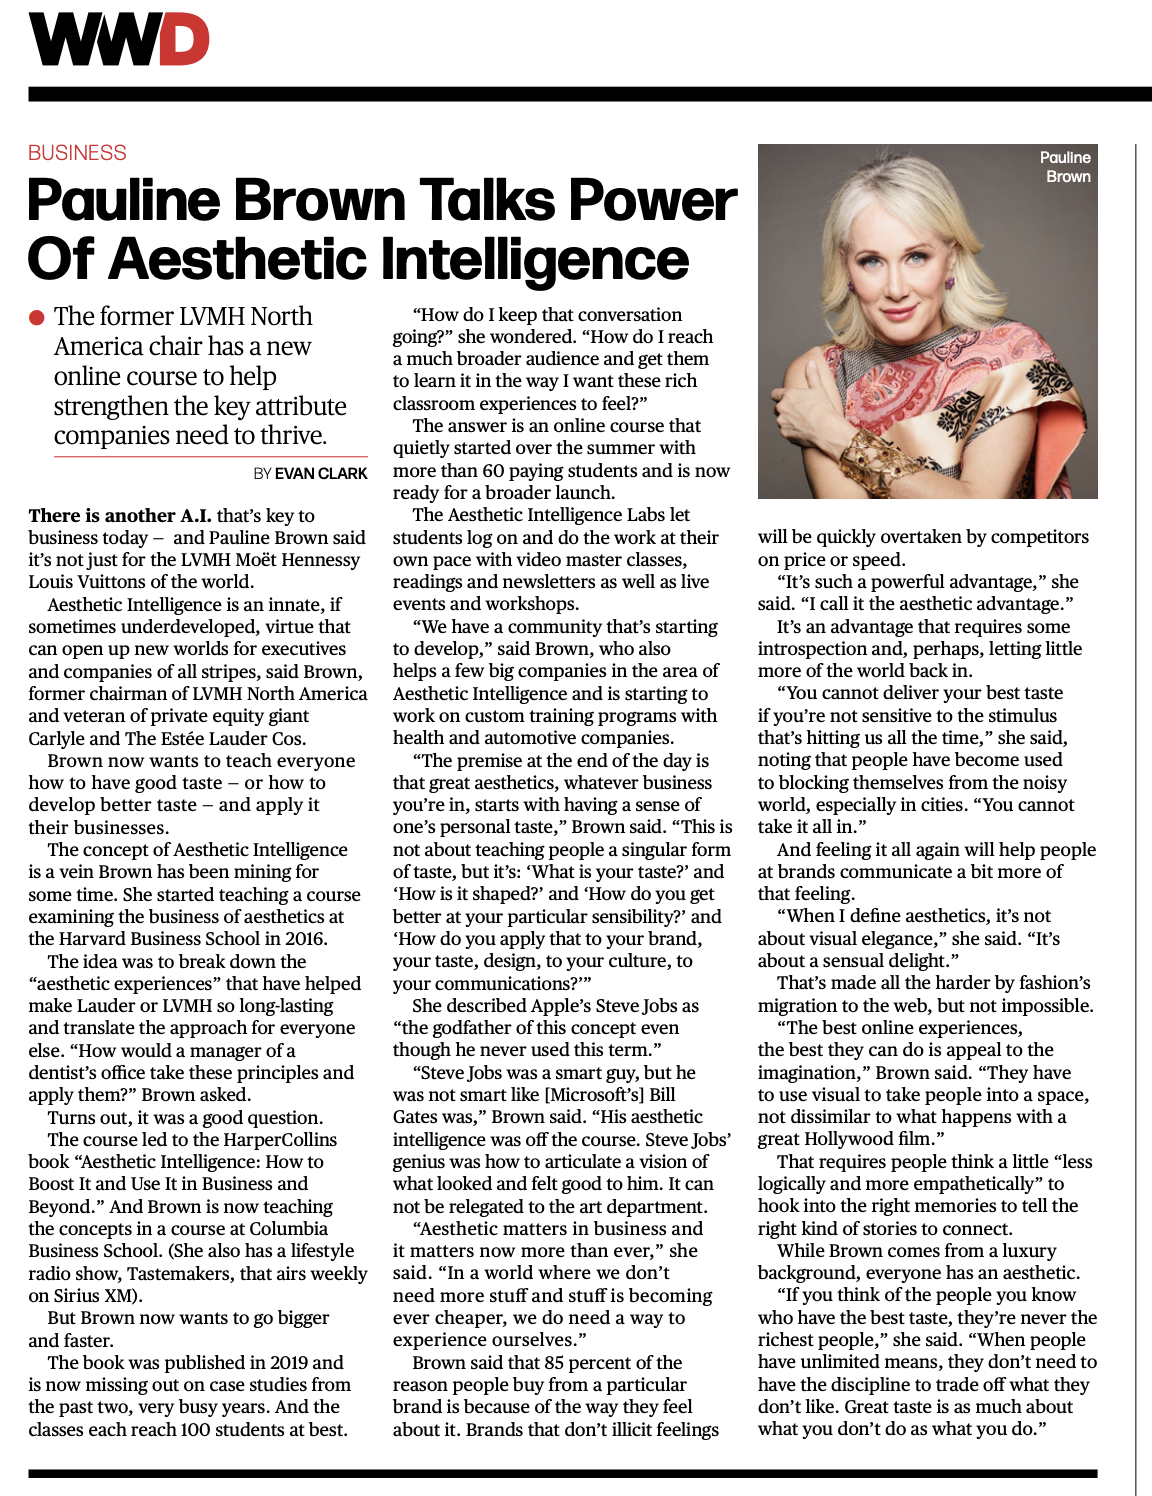 Pauline Brown WWD Article